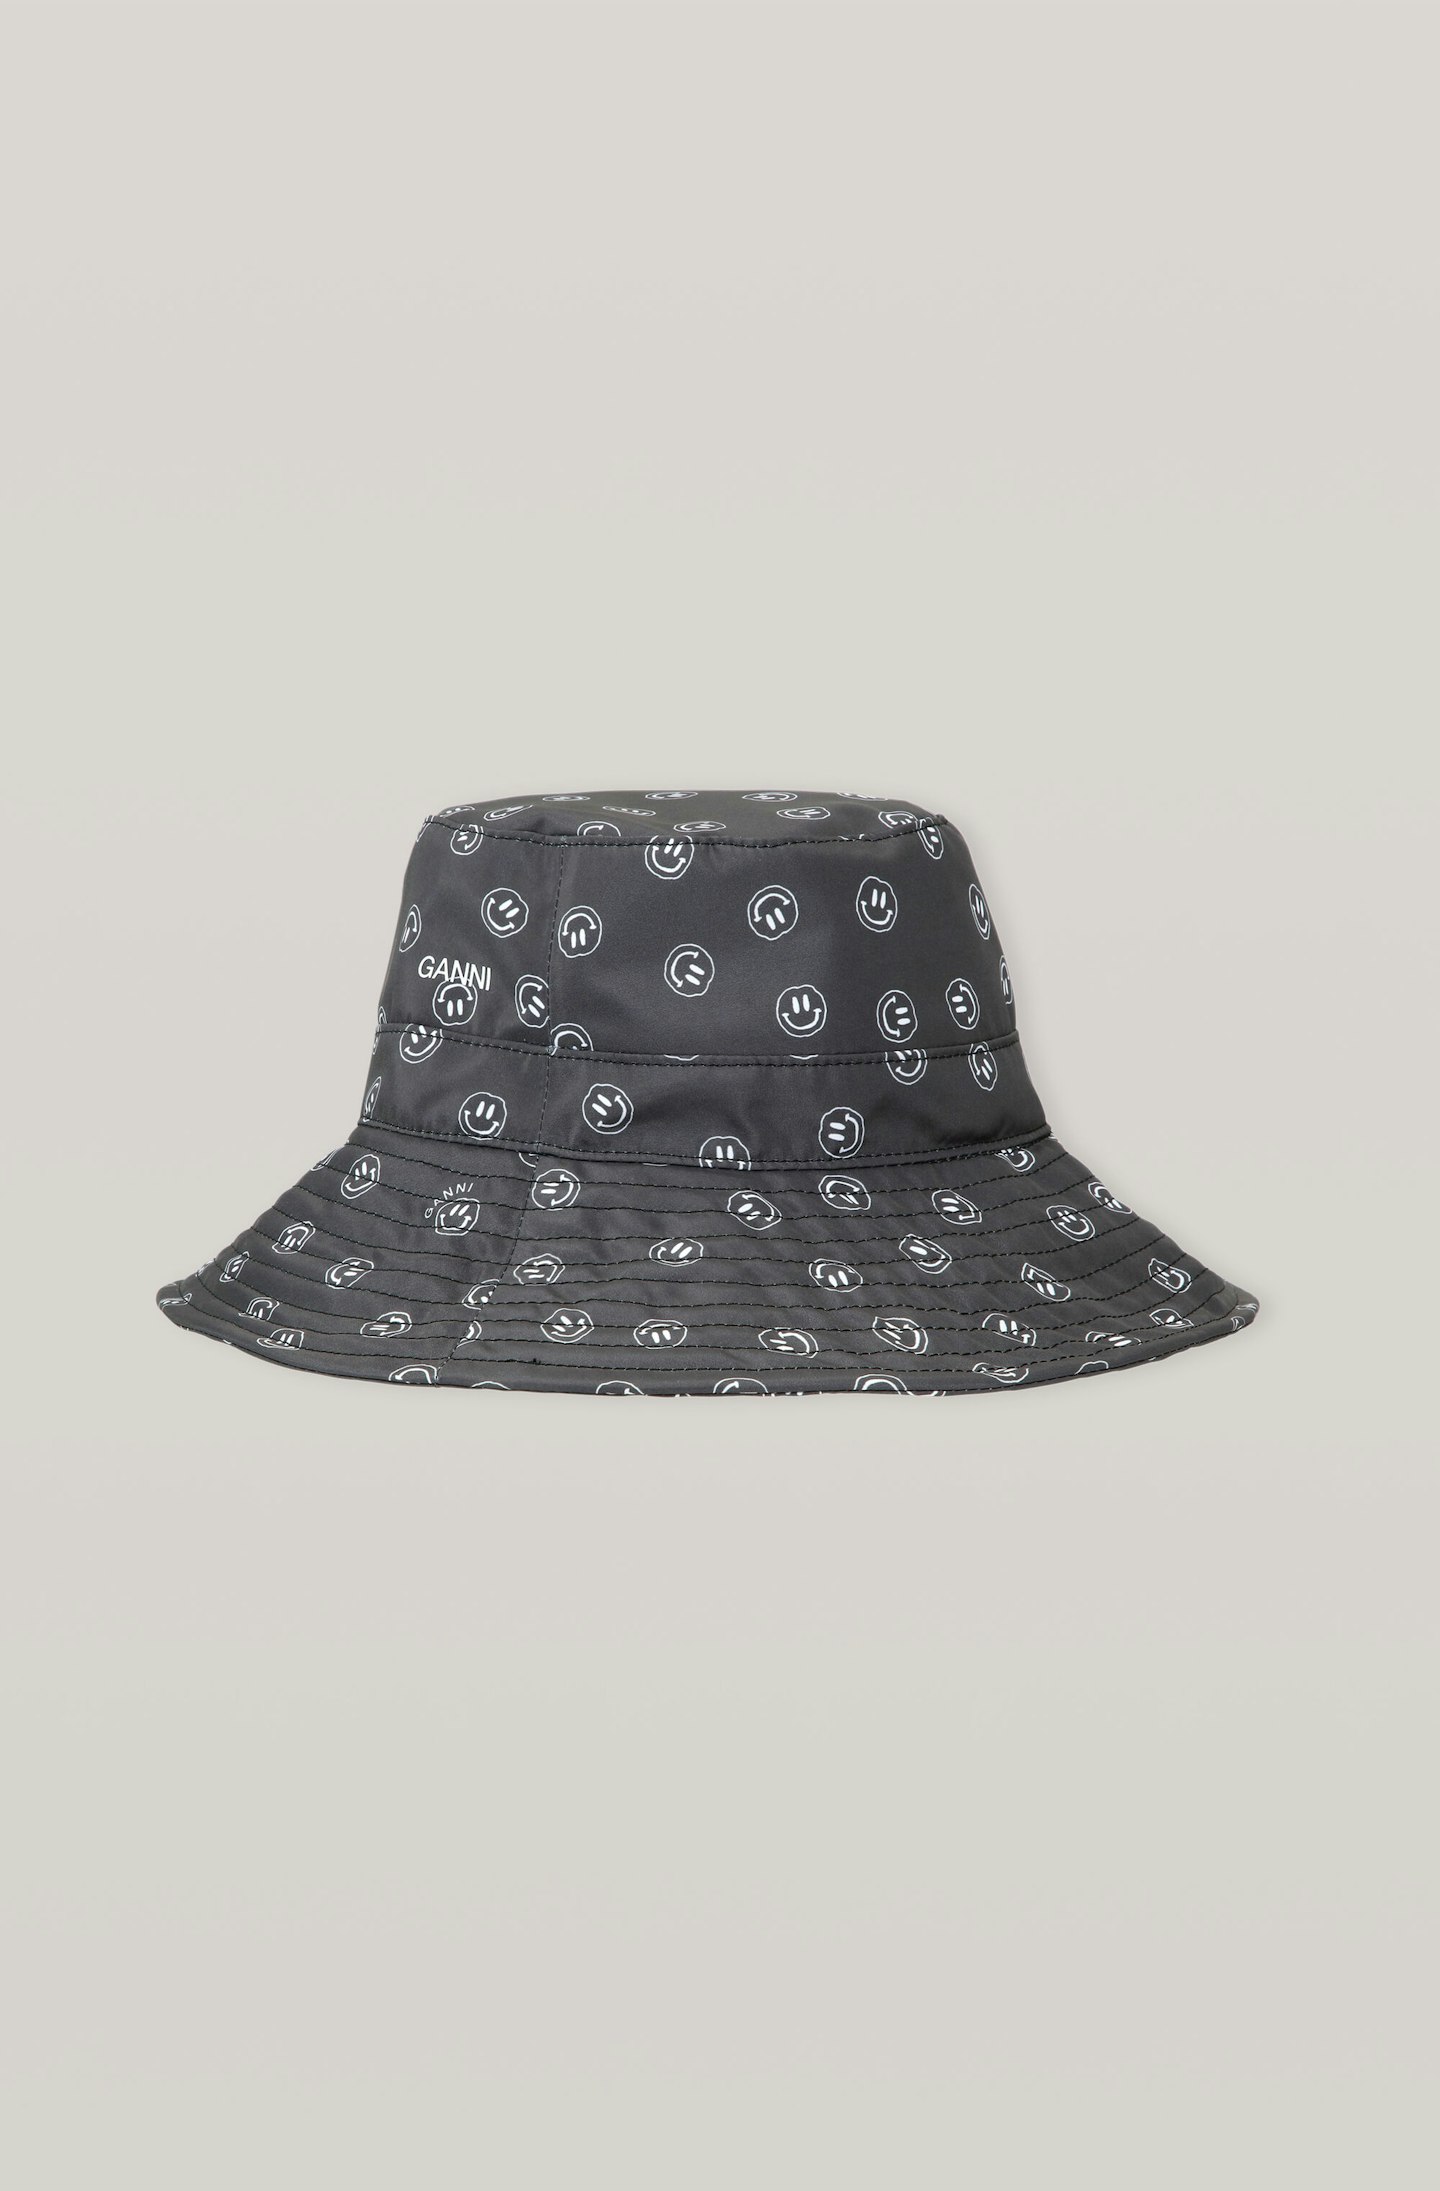 Ganni, Seasonal Recycled Tech Fabric Bucket Hat, £75